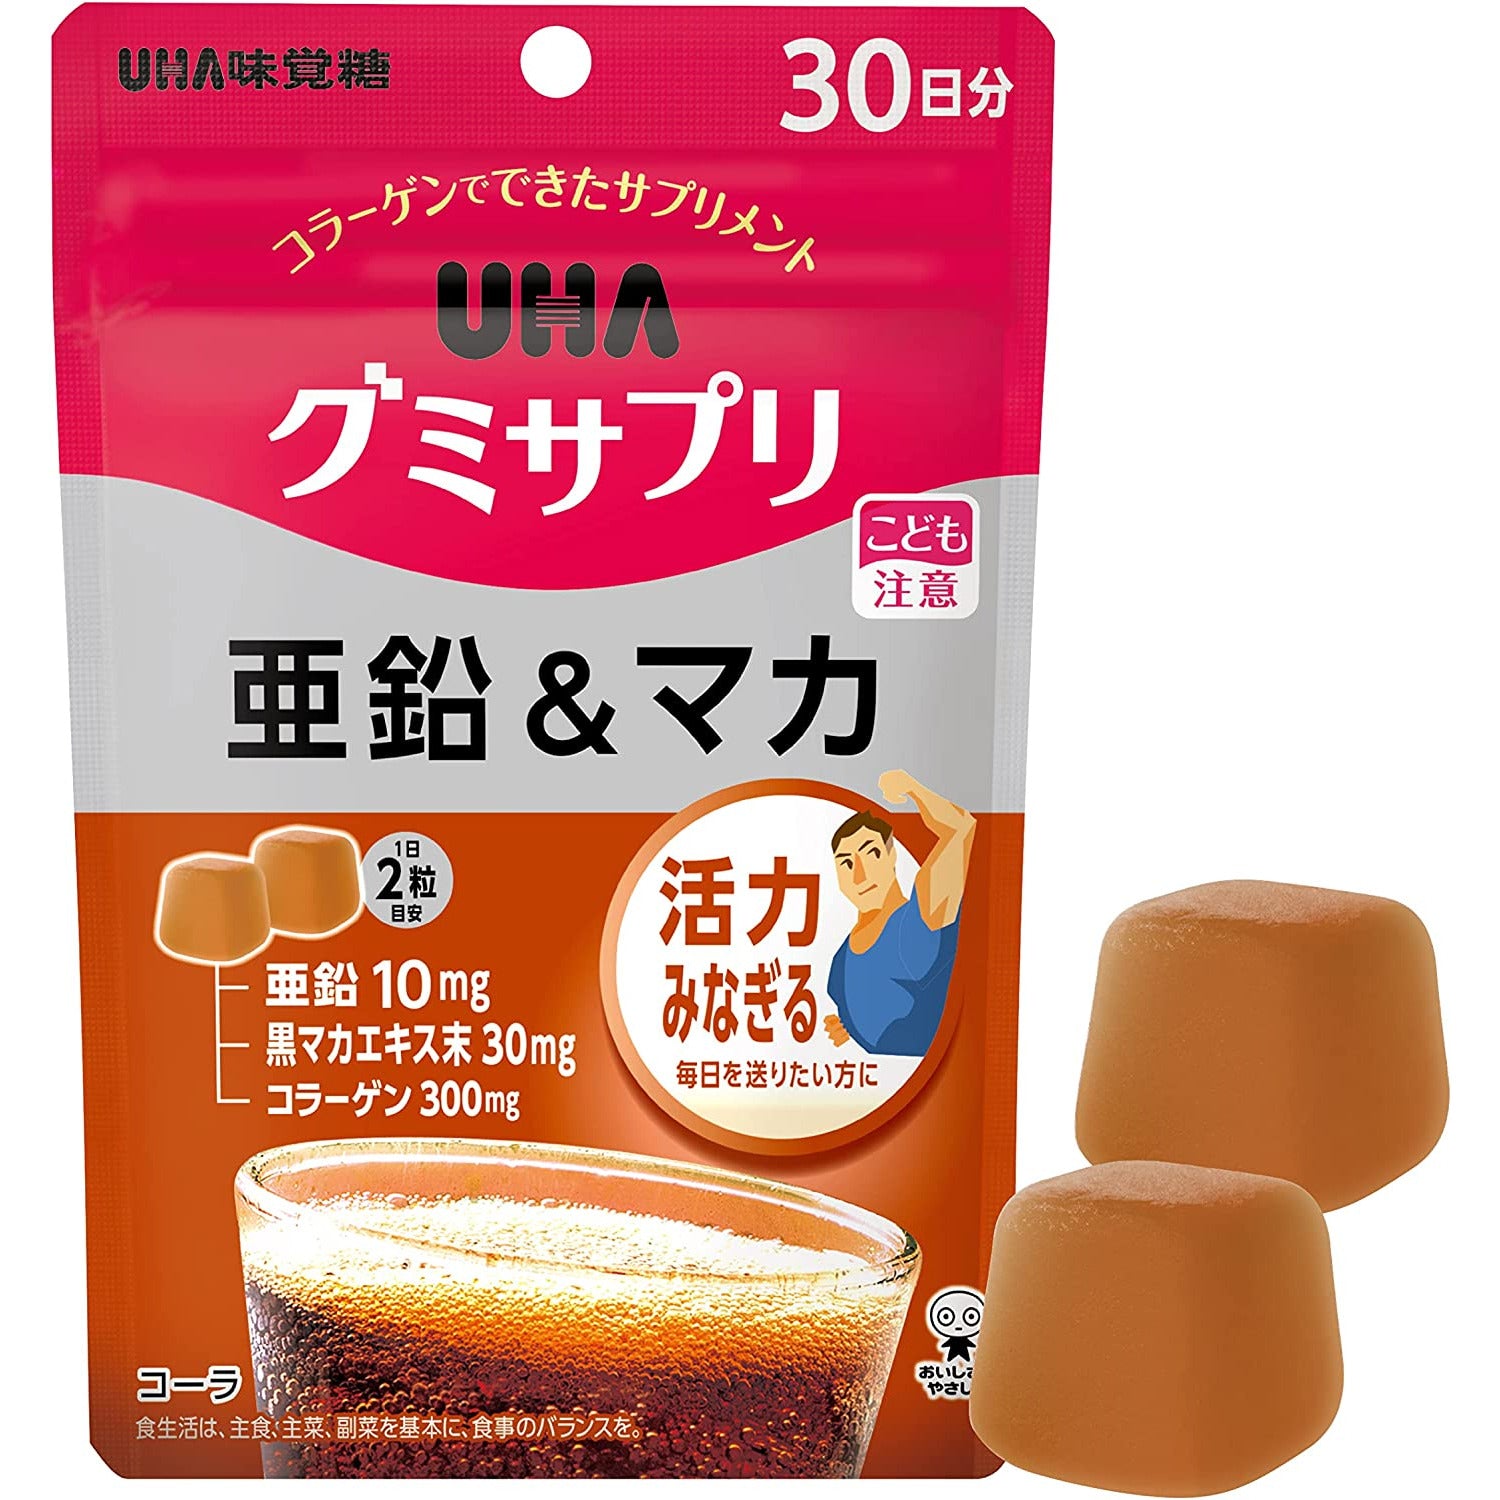 Yuha Mikakuto UHA Gummy Supplement Zinc & Maca SP 60 tablets